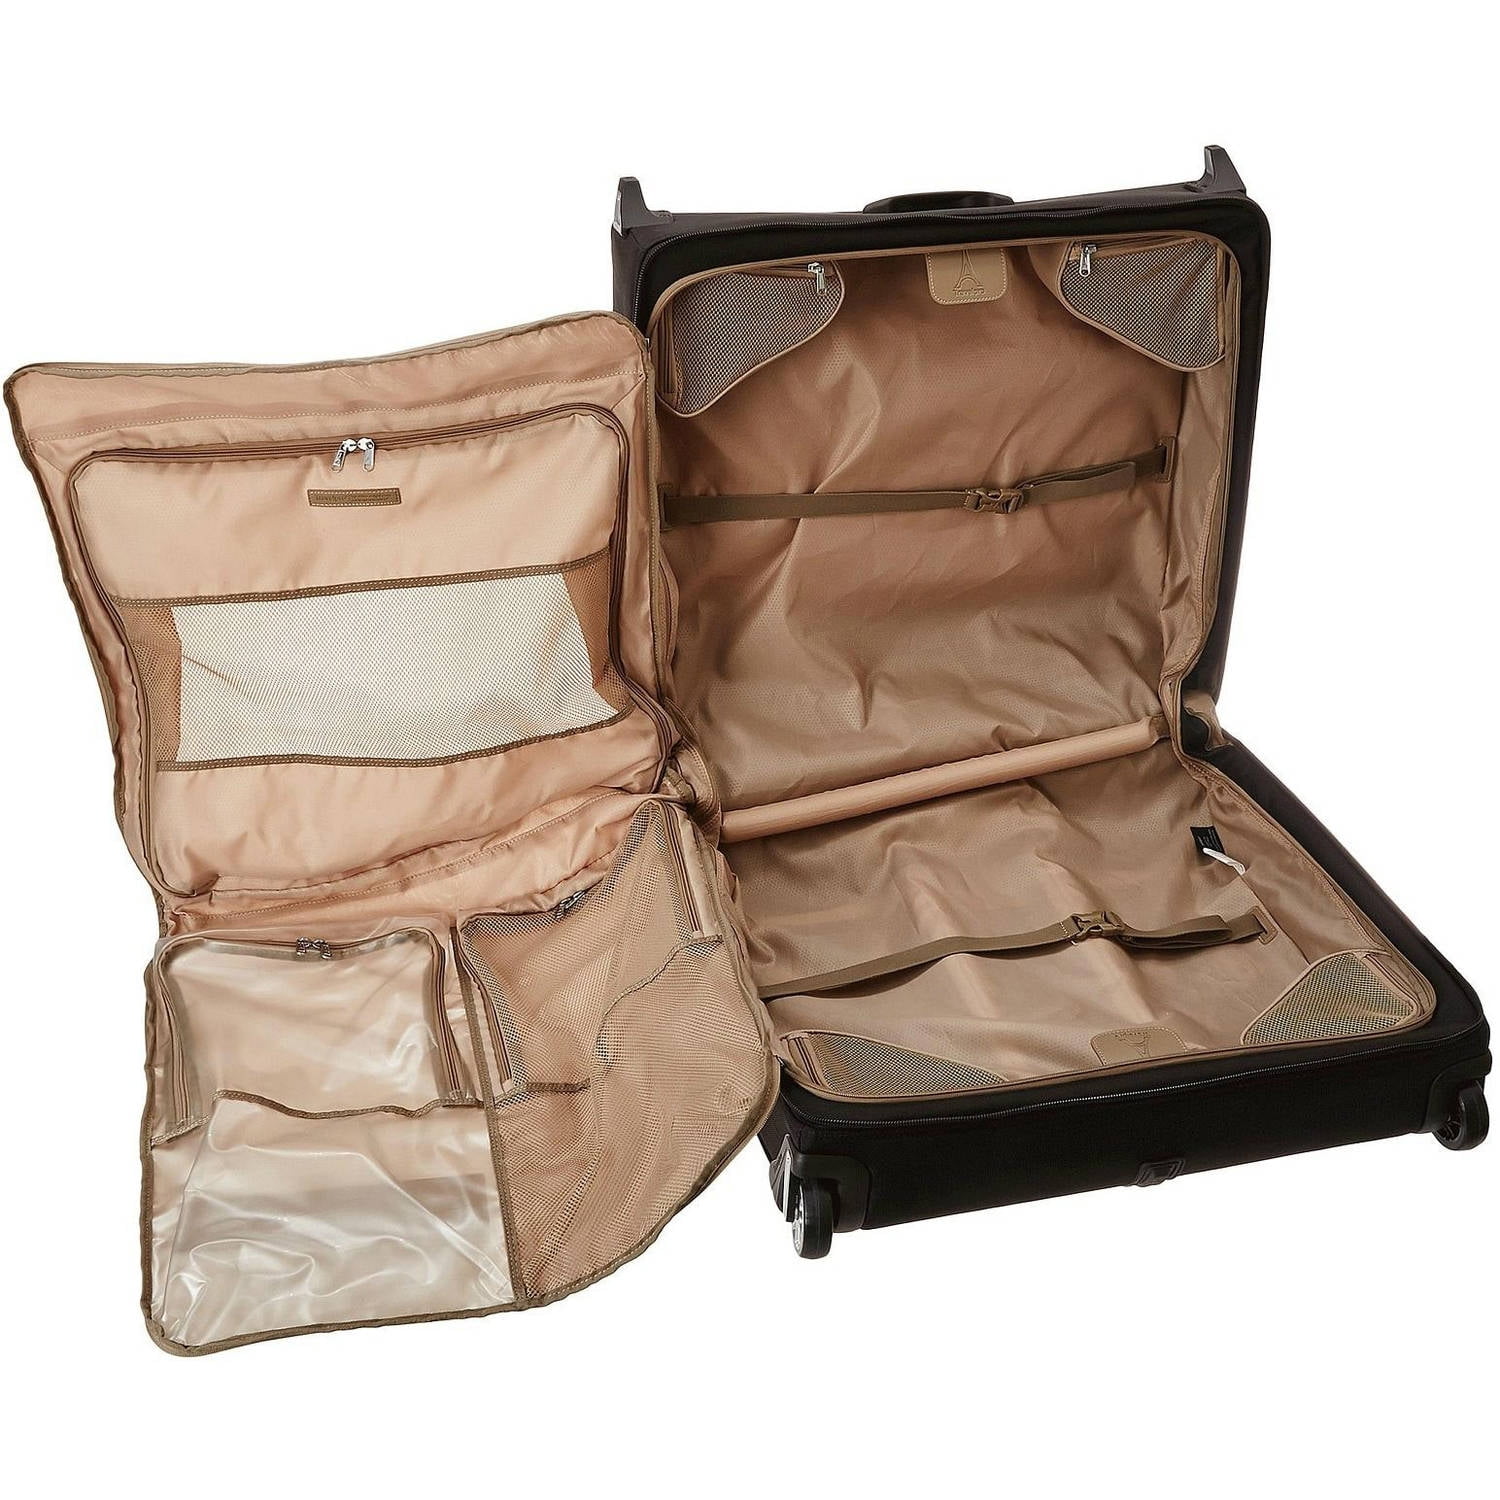 Buy the TravelPro Black Nylon 50in Expandable Garment Bag - 2